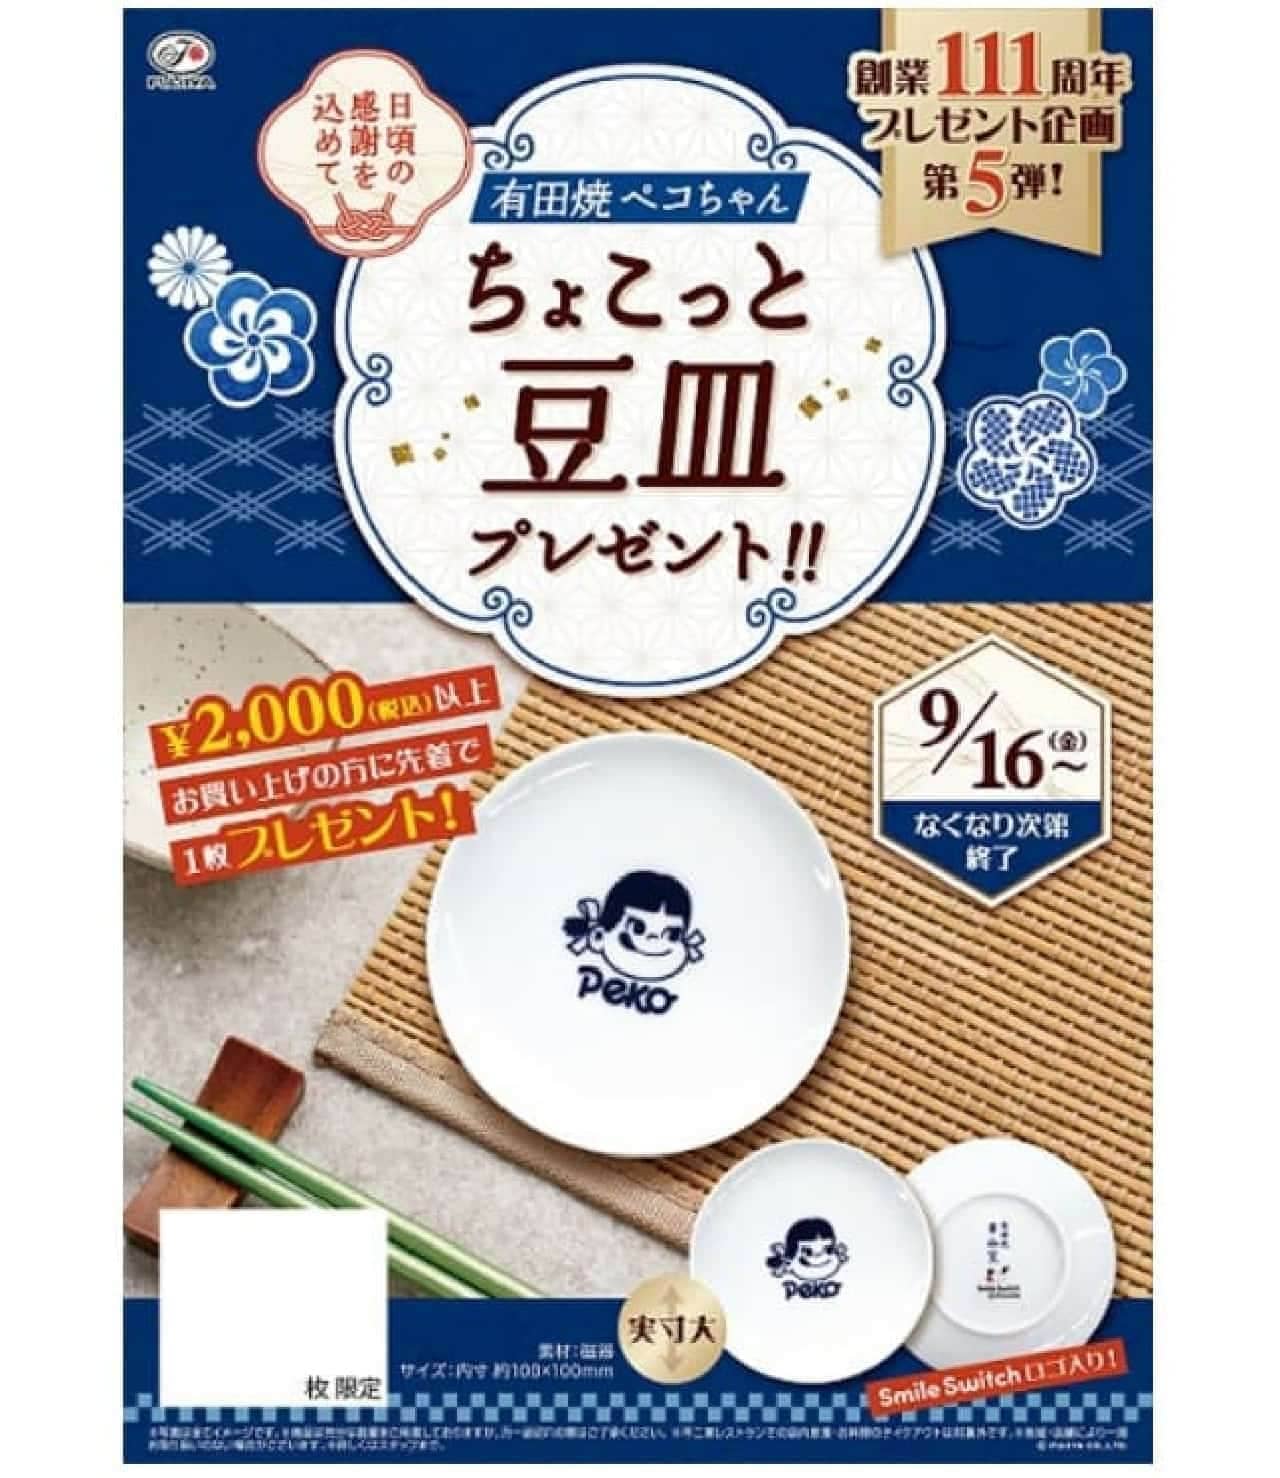 Fujiya Confectionary Shop "Aritayaki Peko-chan Chokotto Mame-dara" present campaign